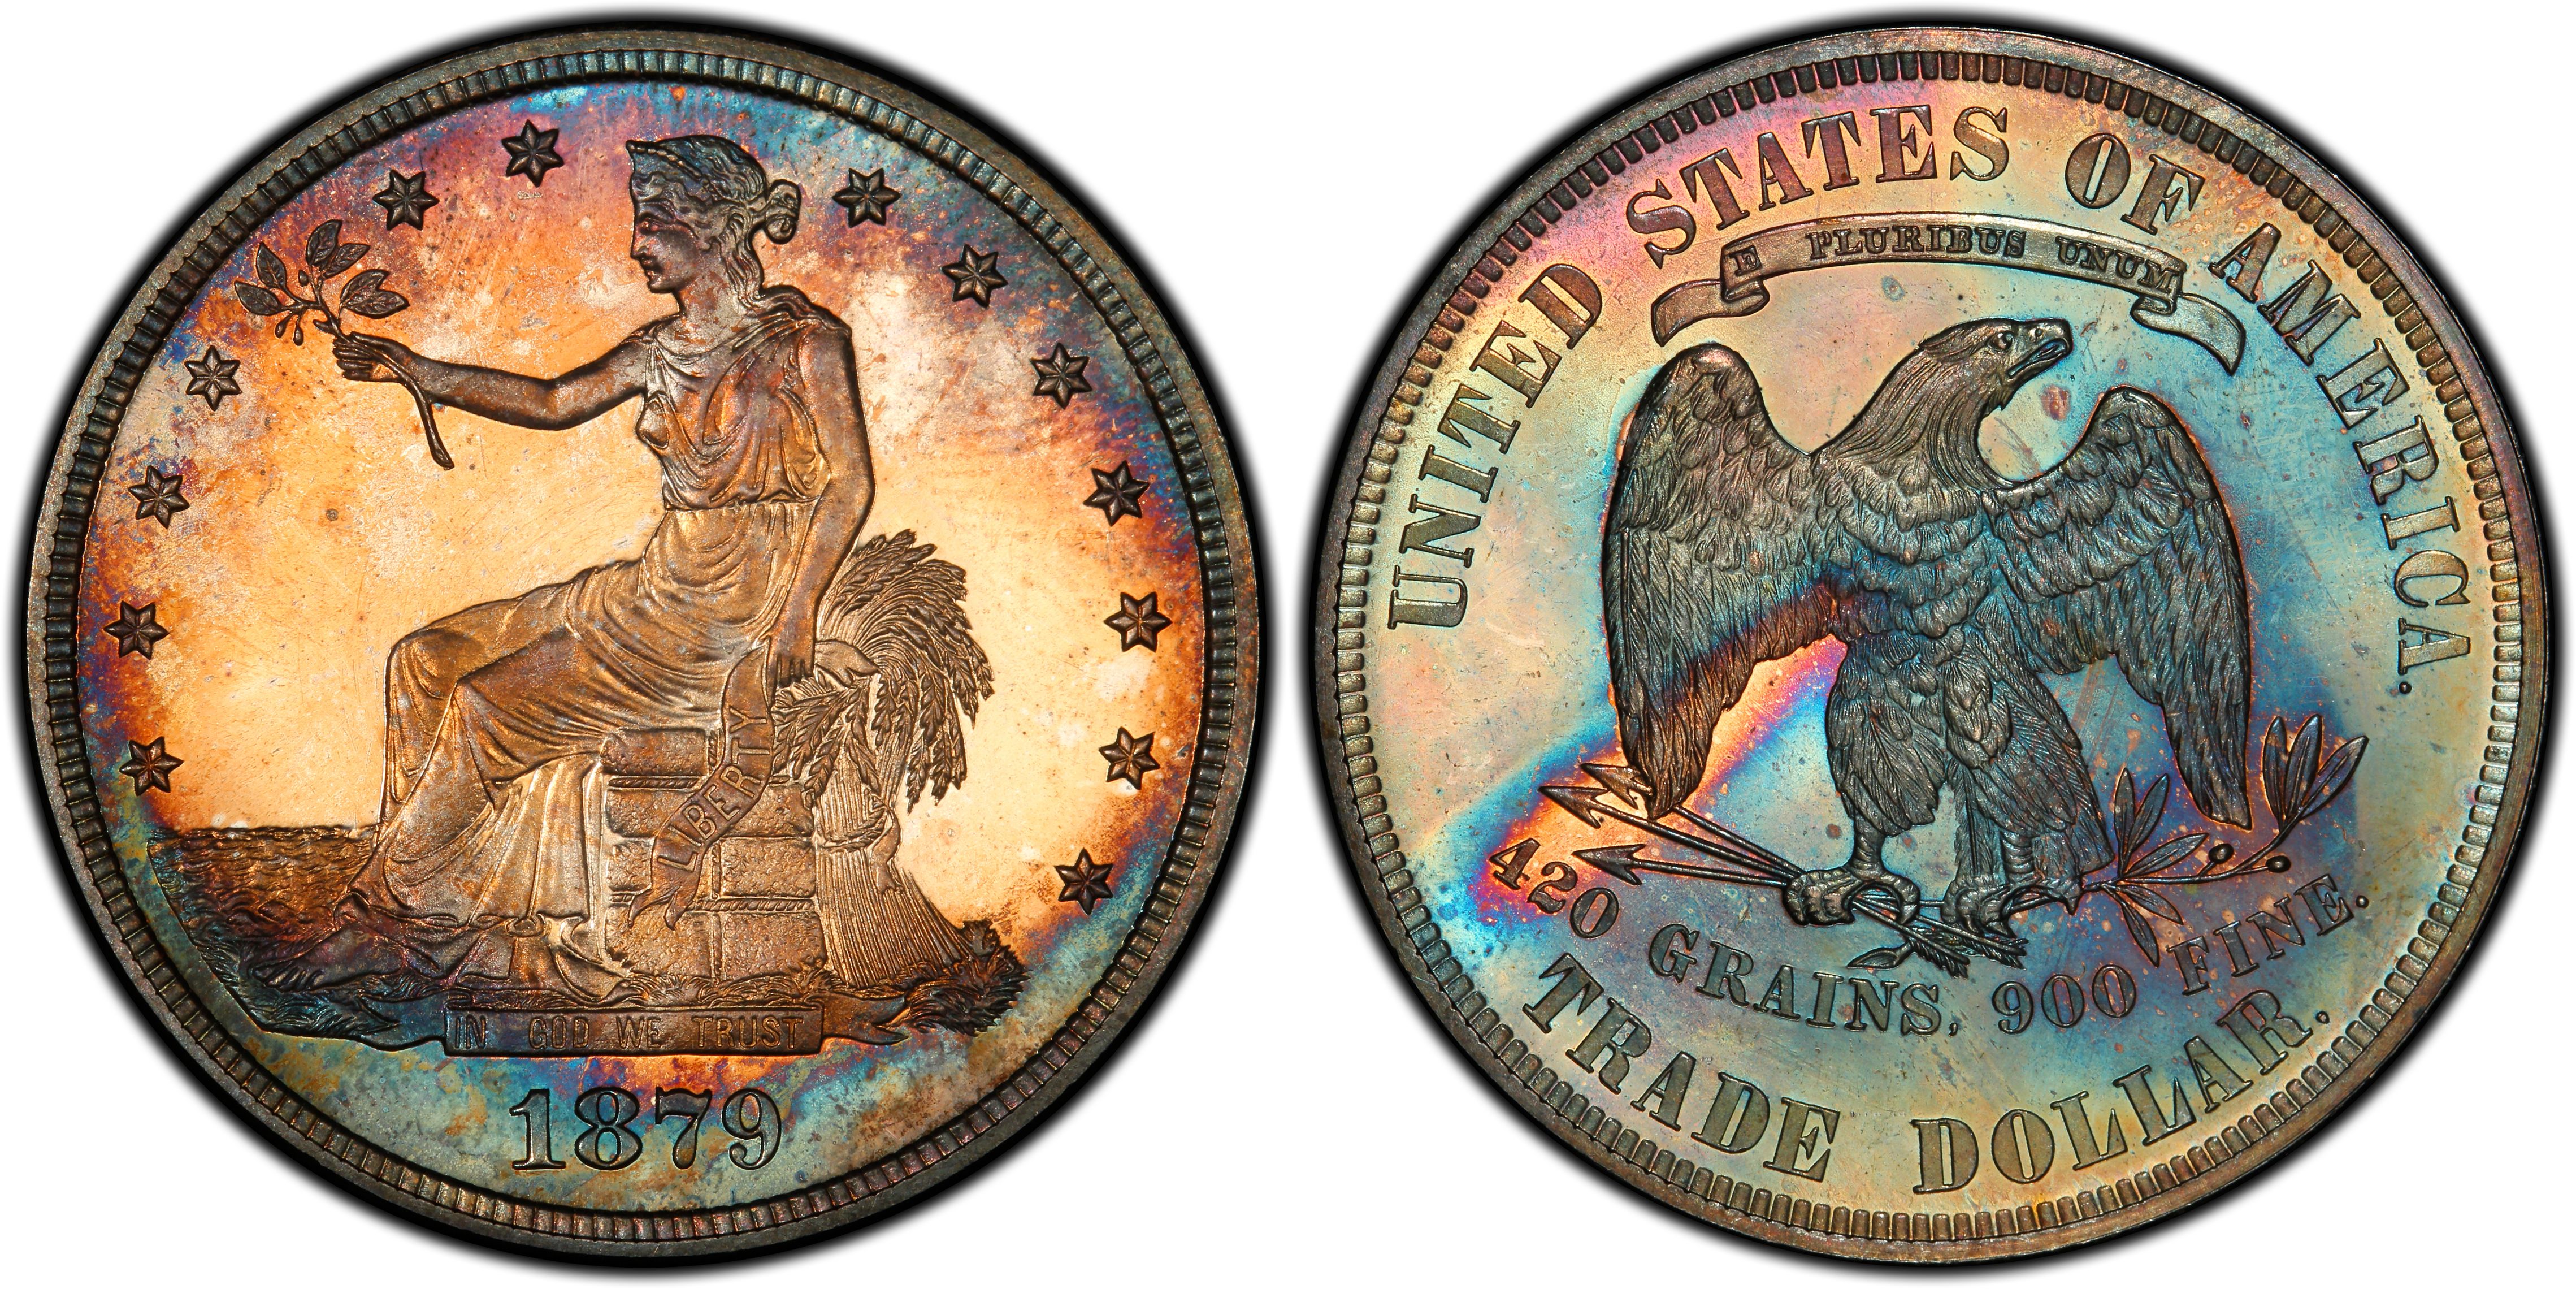 Best looking U.S. coins - AR15.COM2200 x 1100